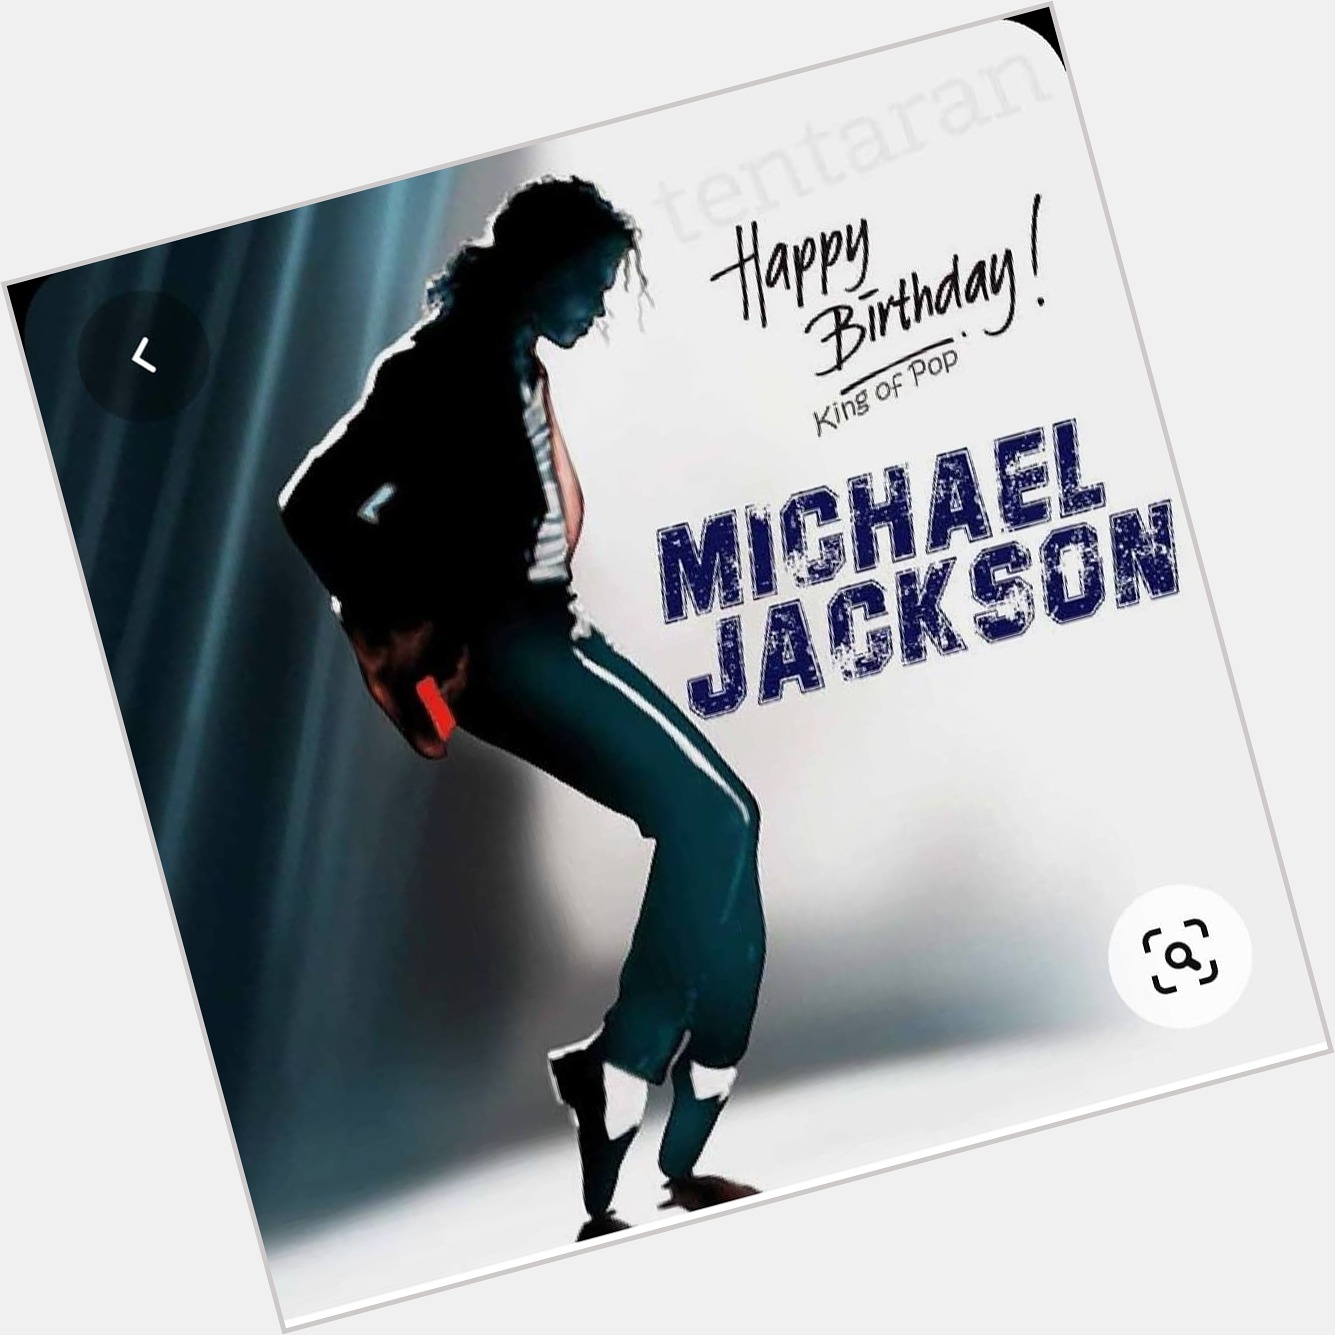 Wish you Happy Birthday Legend of Dance Michael Jackson Sir... Miss you always Sir... 